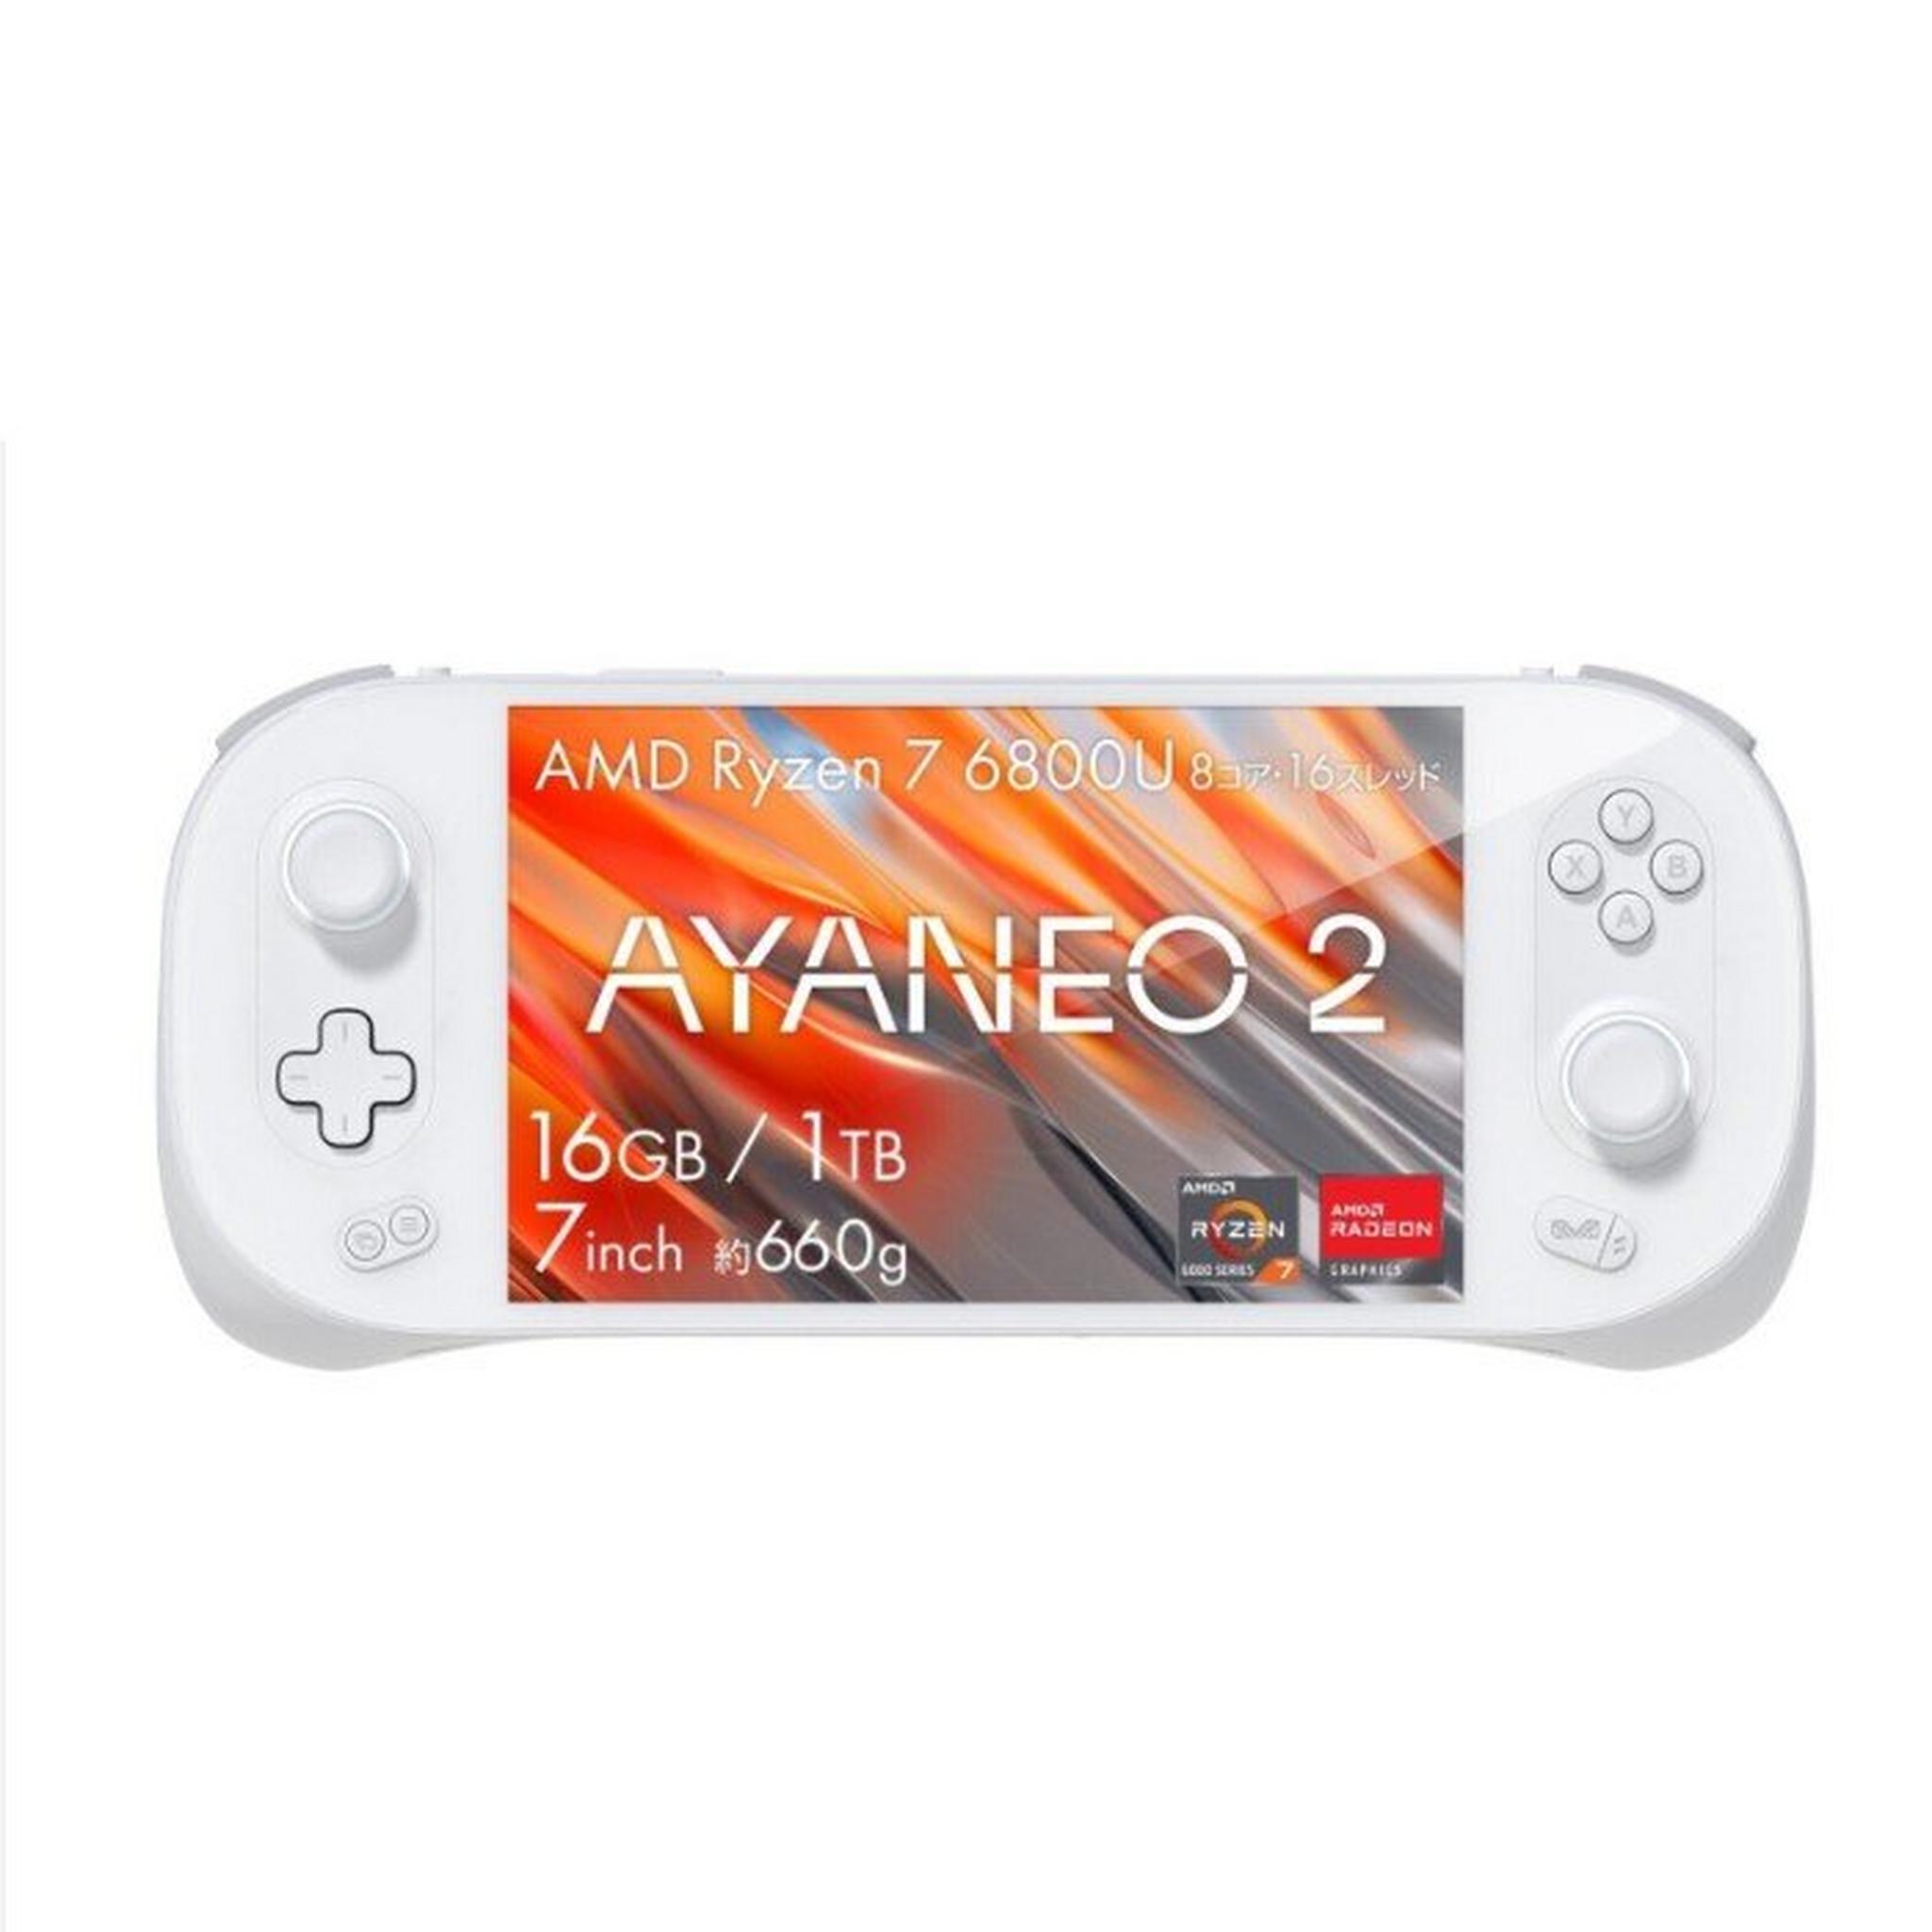 Ayaneo 2 Ryzen 7 6800U Handheld Gaming Console, 7-inch, 16GB + 1TB – White